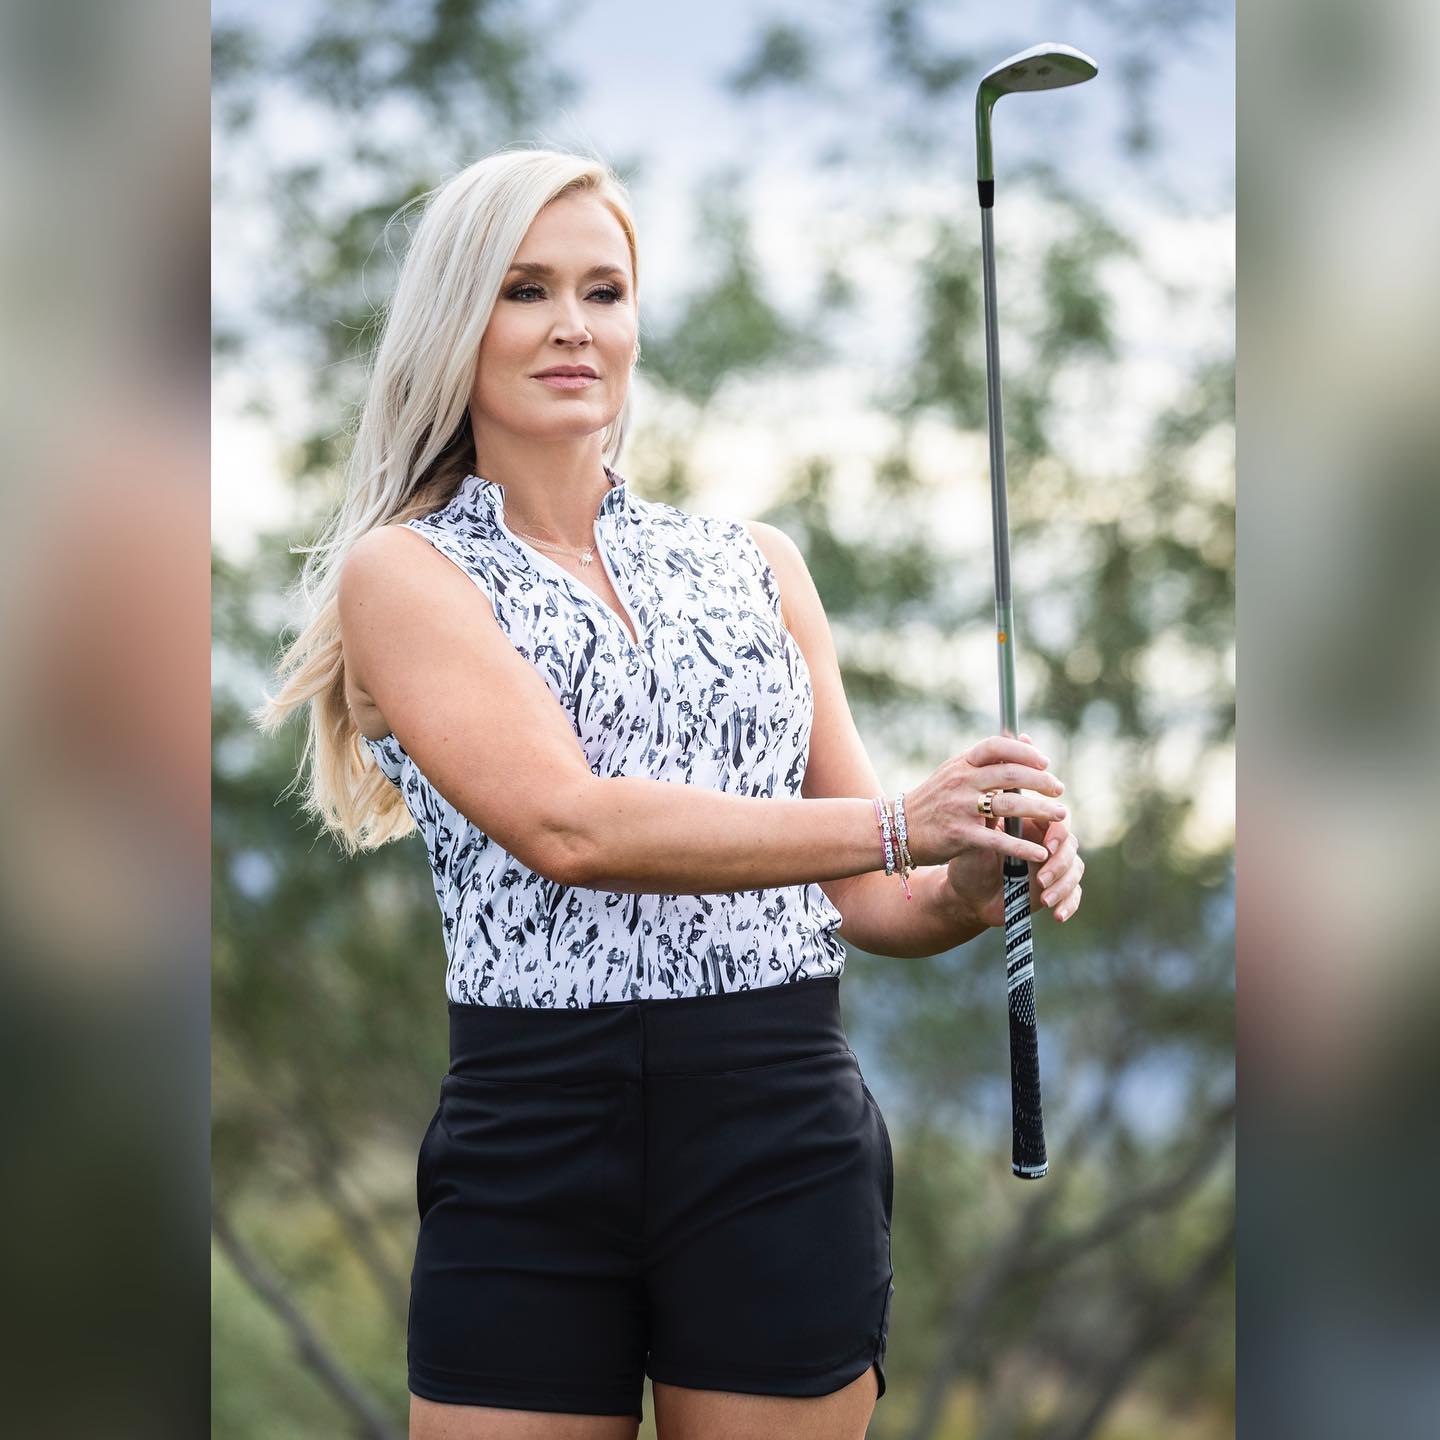 Blair O'Neal sexy golfer